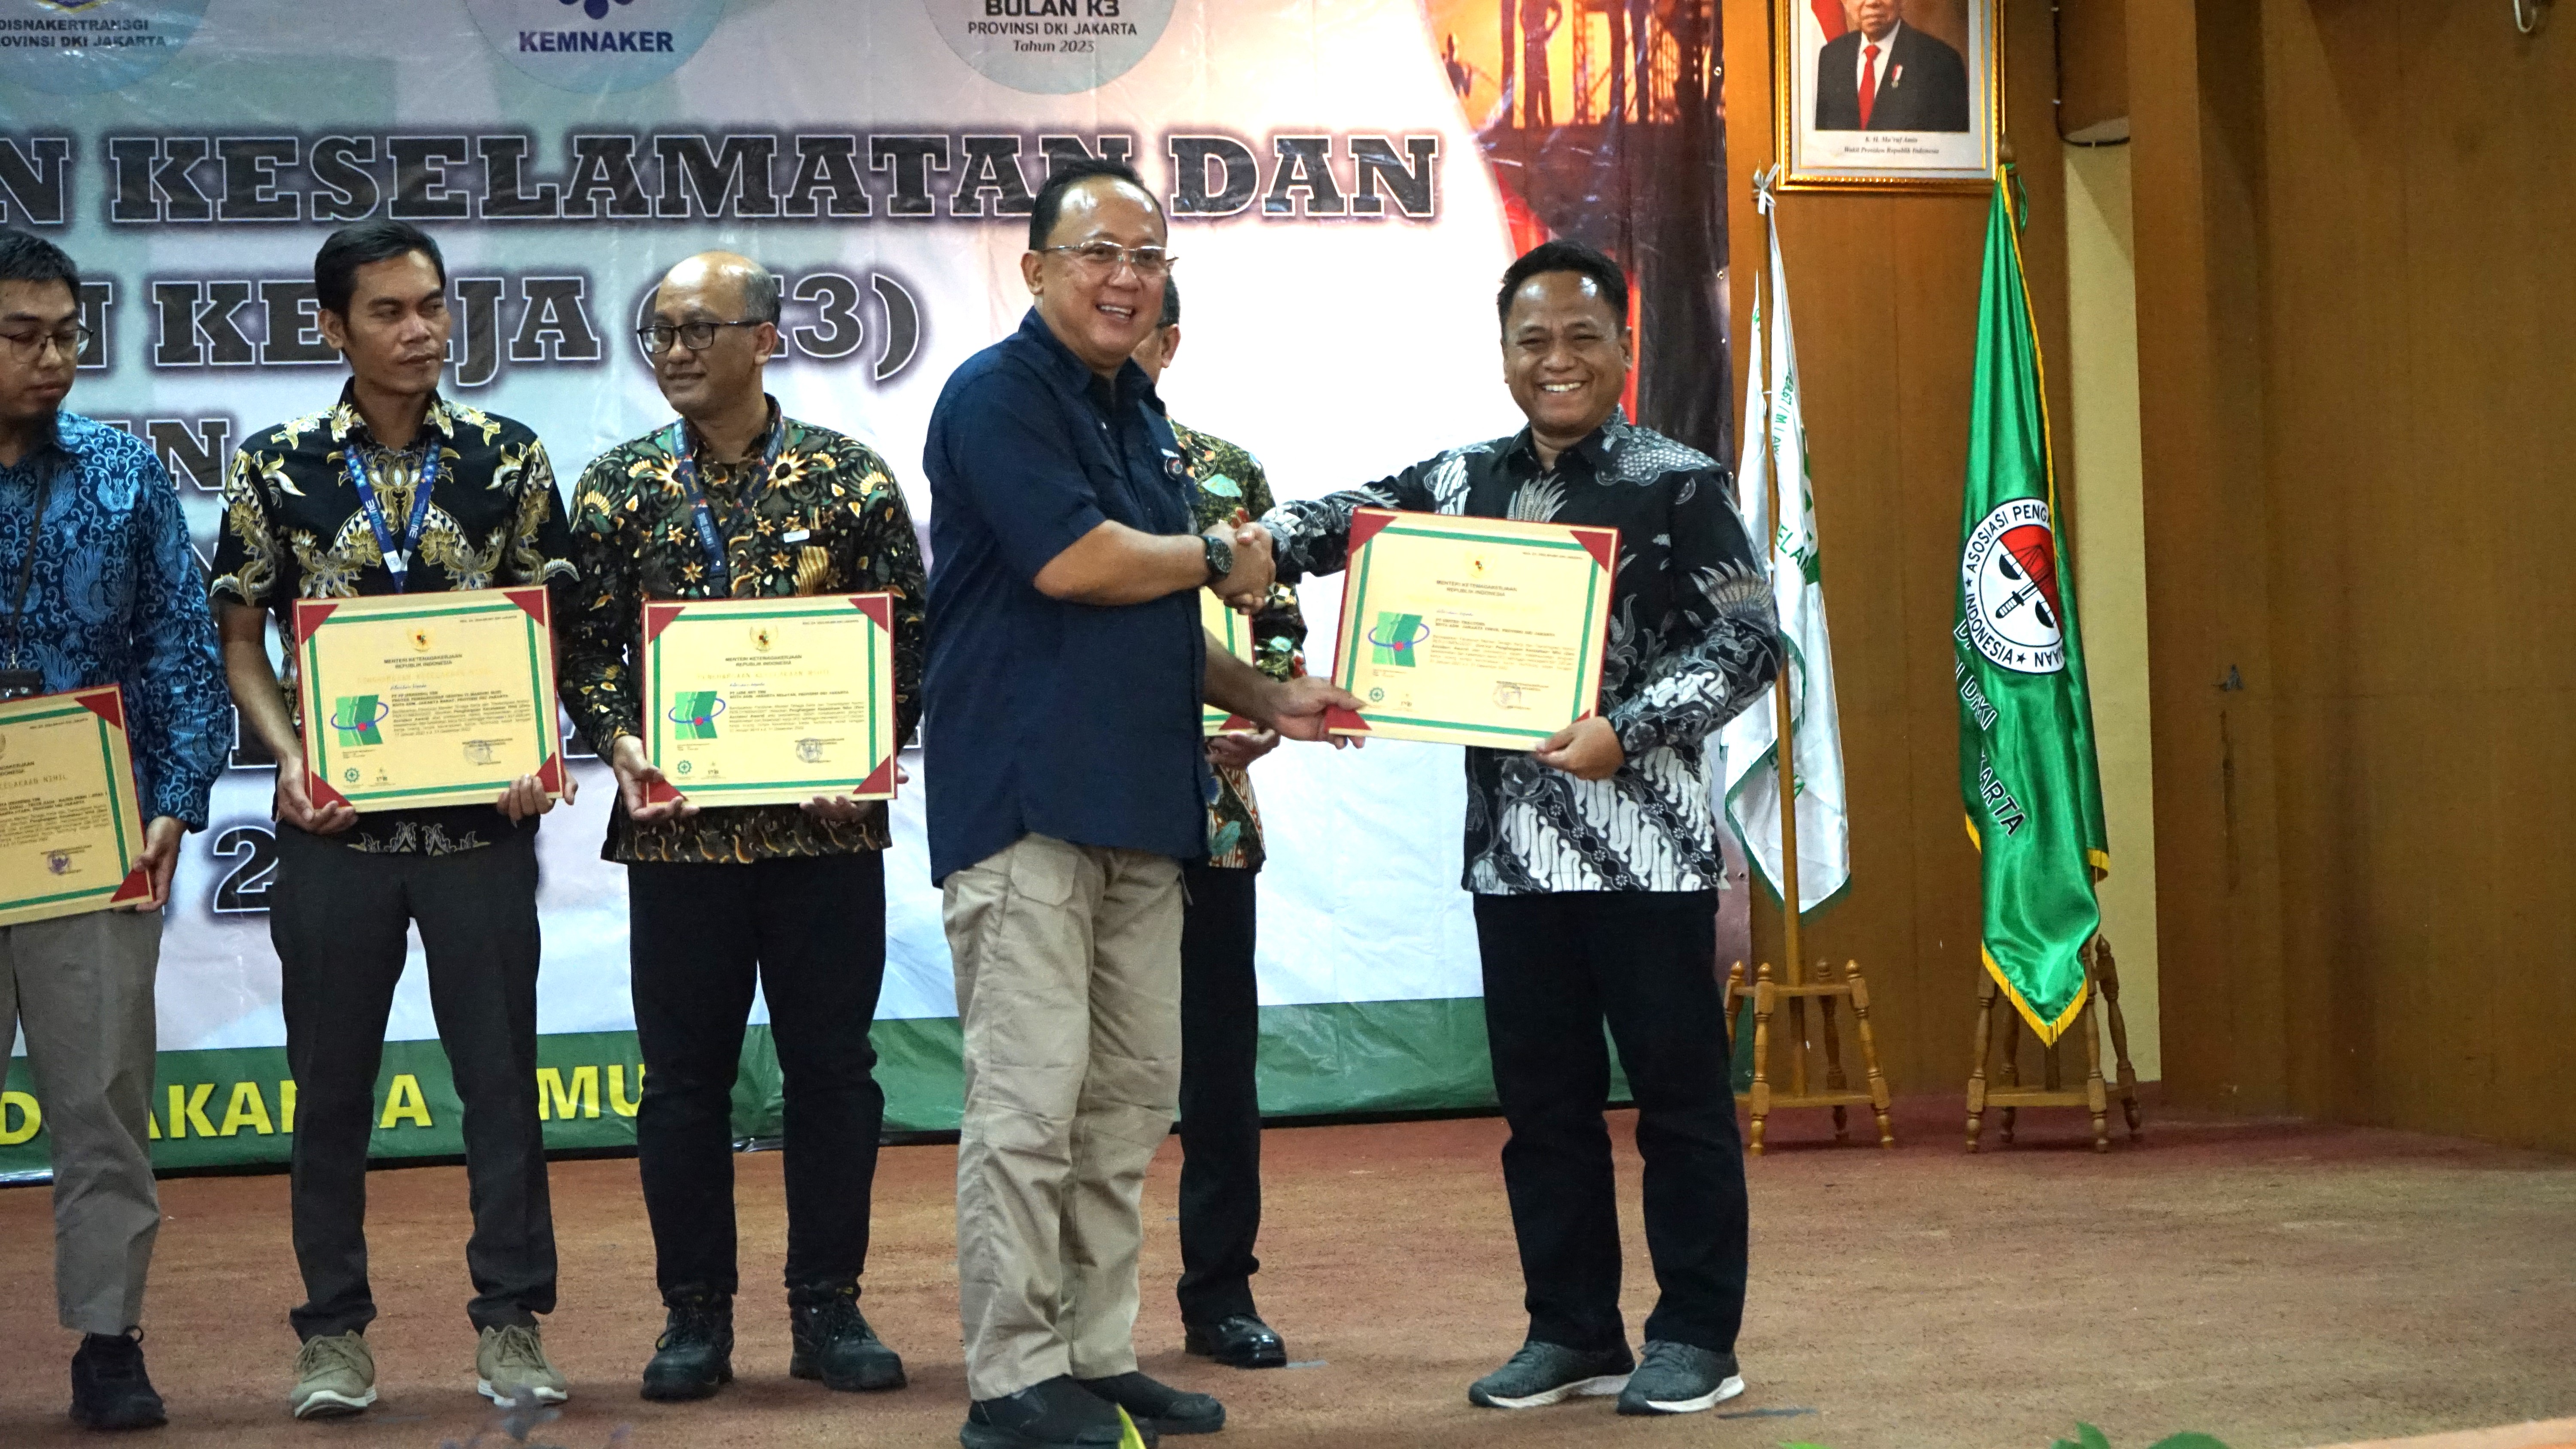 The award presentation from Dr. Ir. Hari Nugroho (Head of the DKI Jakarta Province Manpower, Transmigration and Energy Agency) to UT's representative, Furkon (EHS Team Member) at the East Jakarta Regional Job Training Center (PPKD).